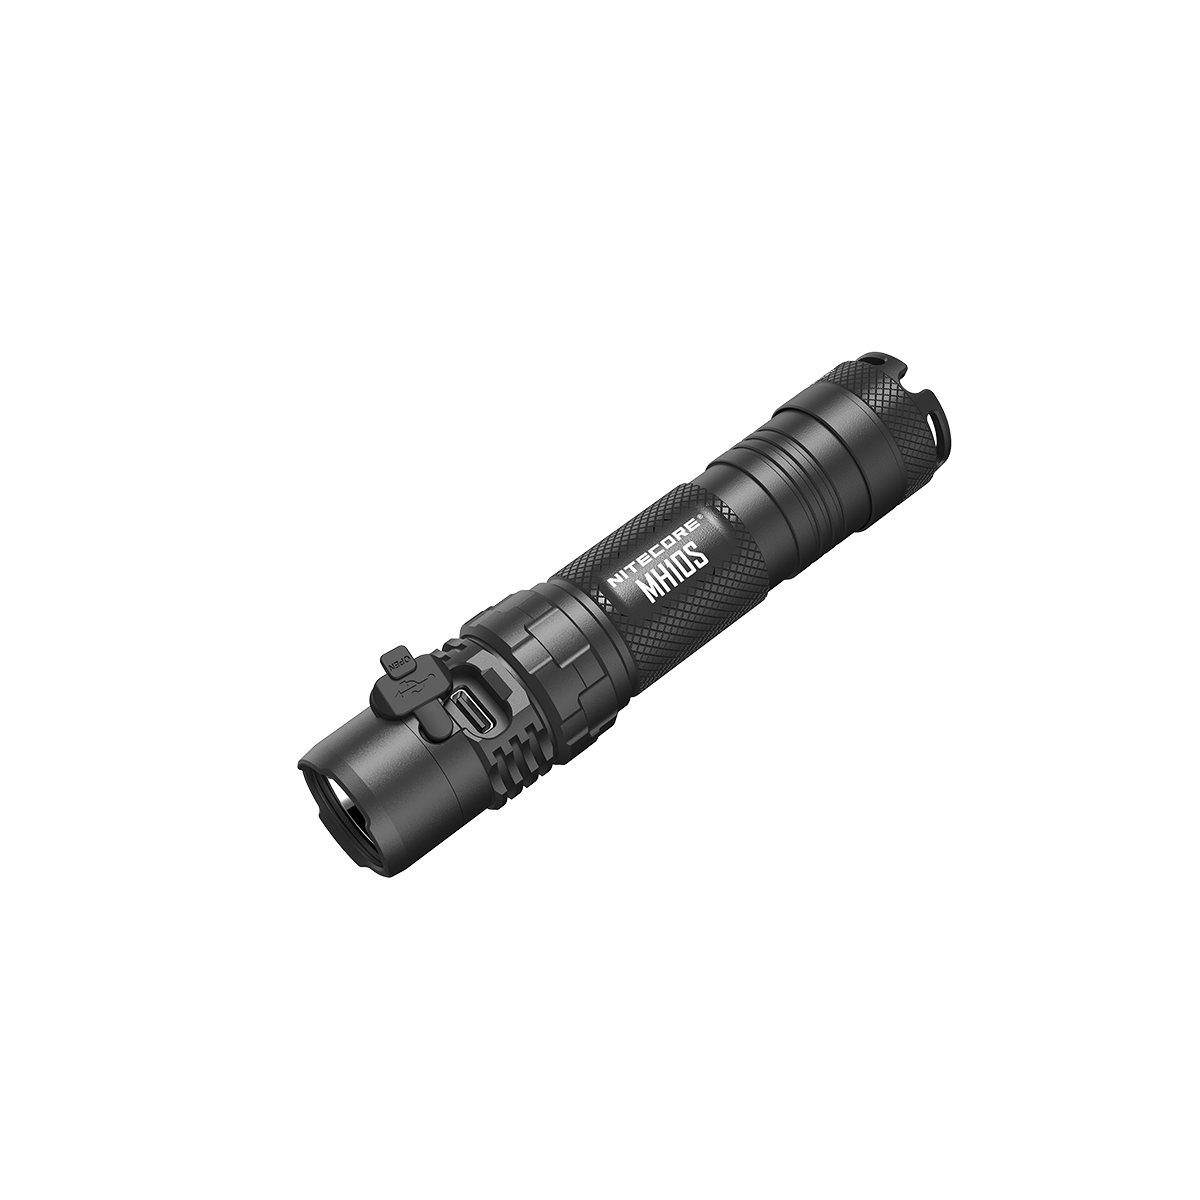 Lampe Nitecore MH25S USB-C rechargeable - 1800Lumens